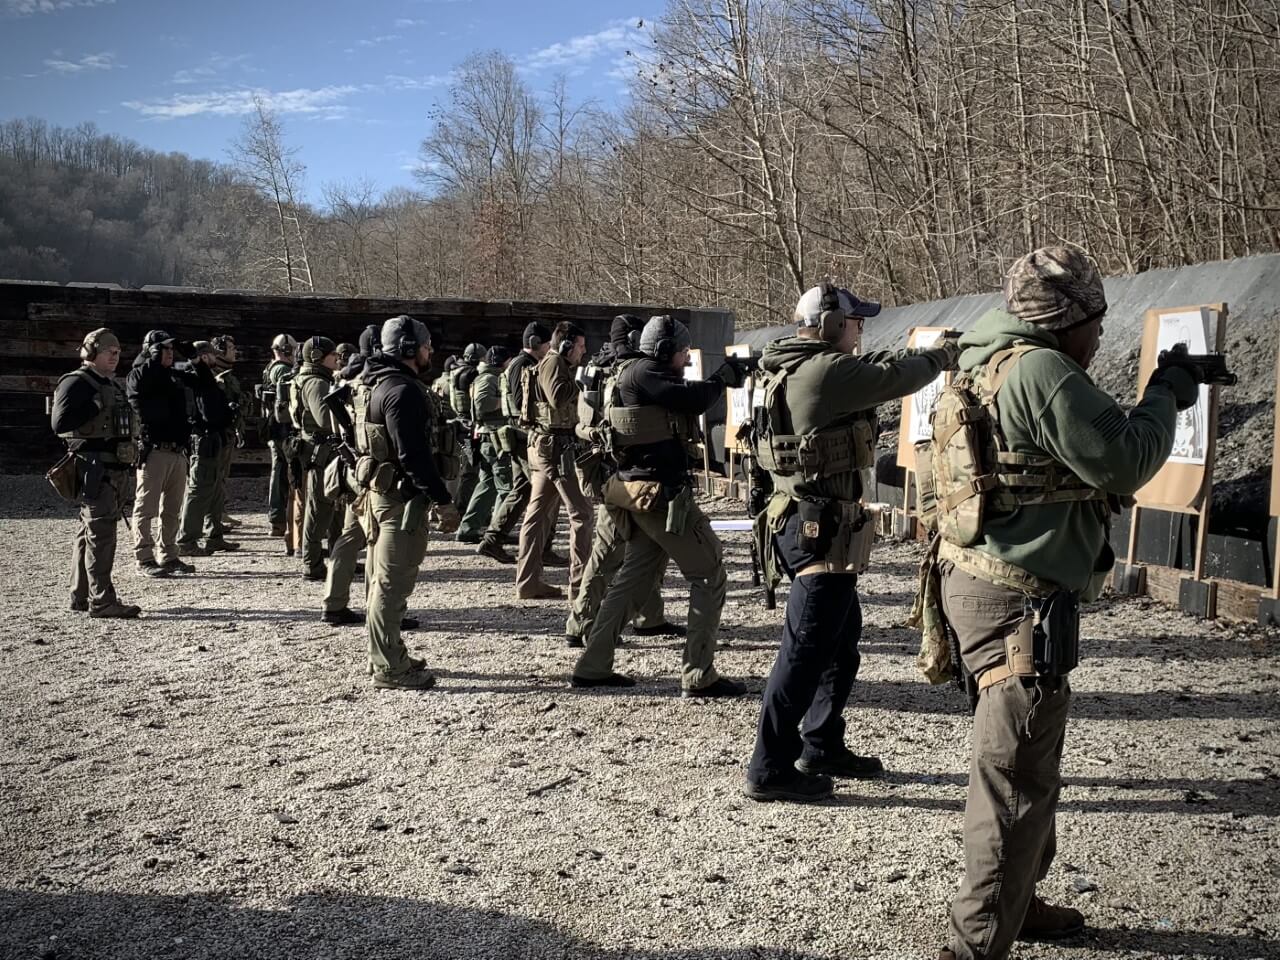 https://norsetactical.com/wp-content/uploads/2022/08/Tactical-Firearms-Training.jpg